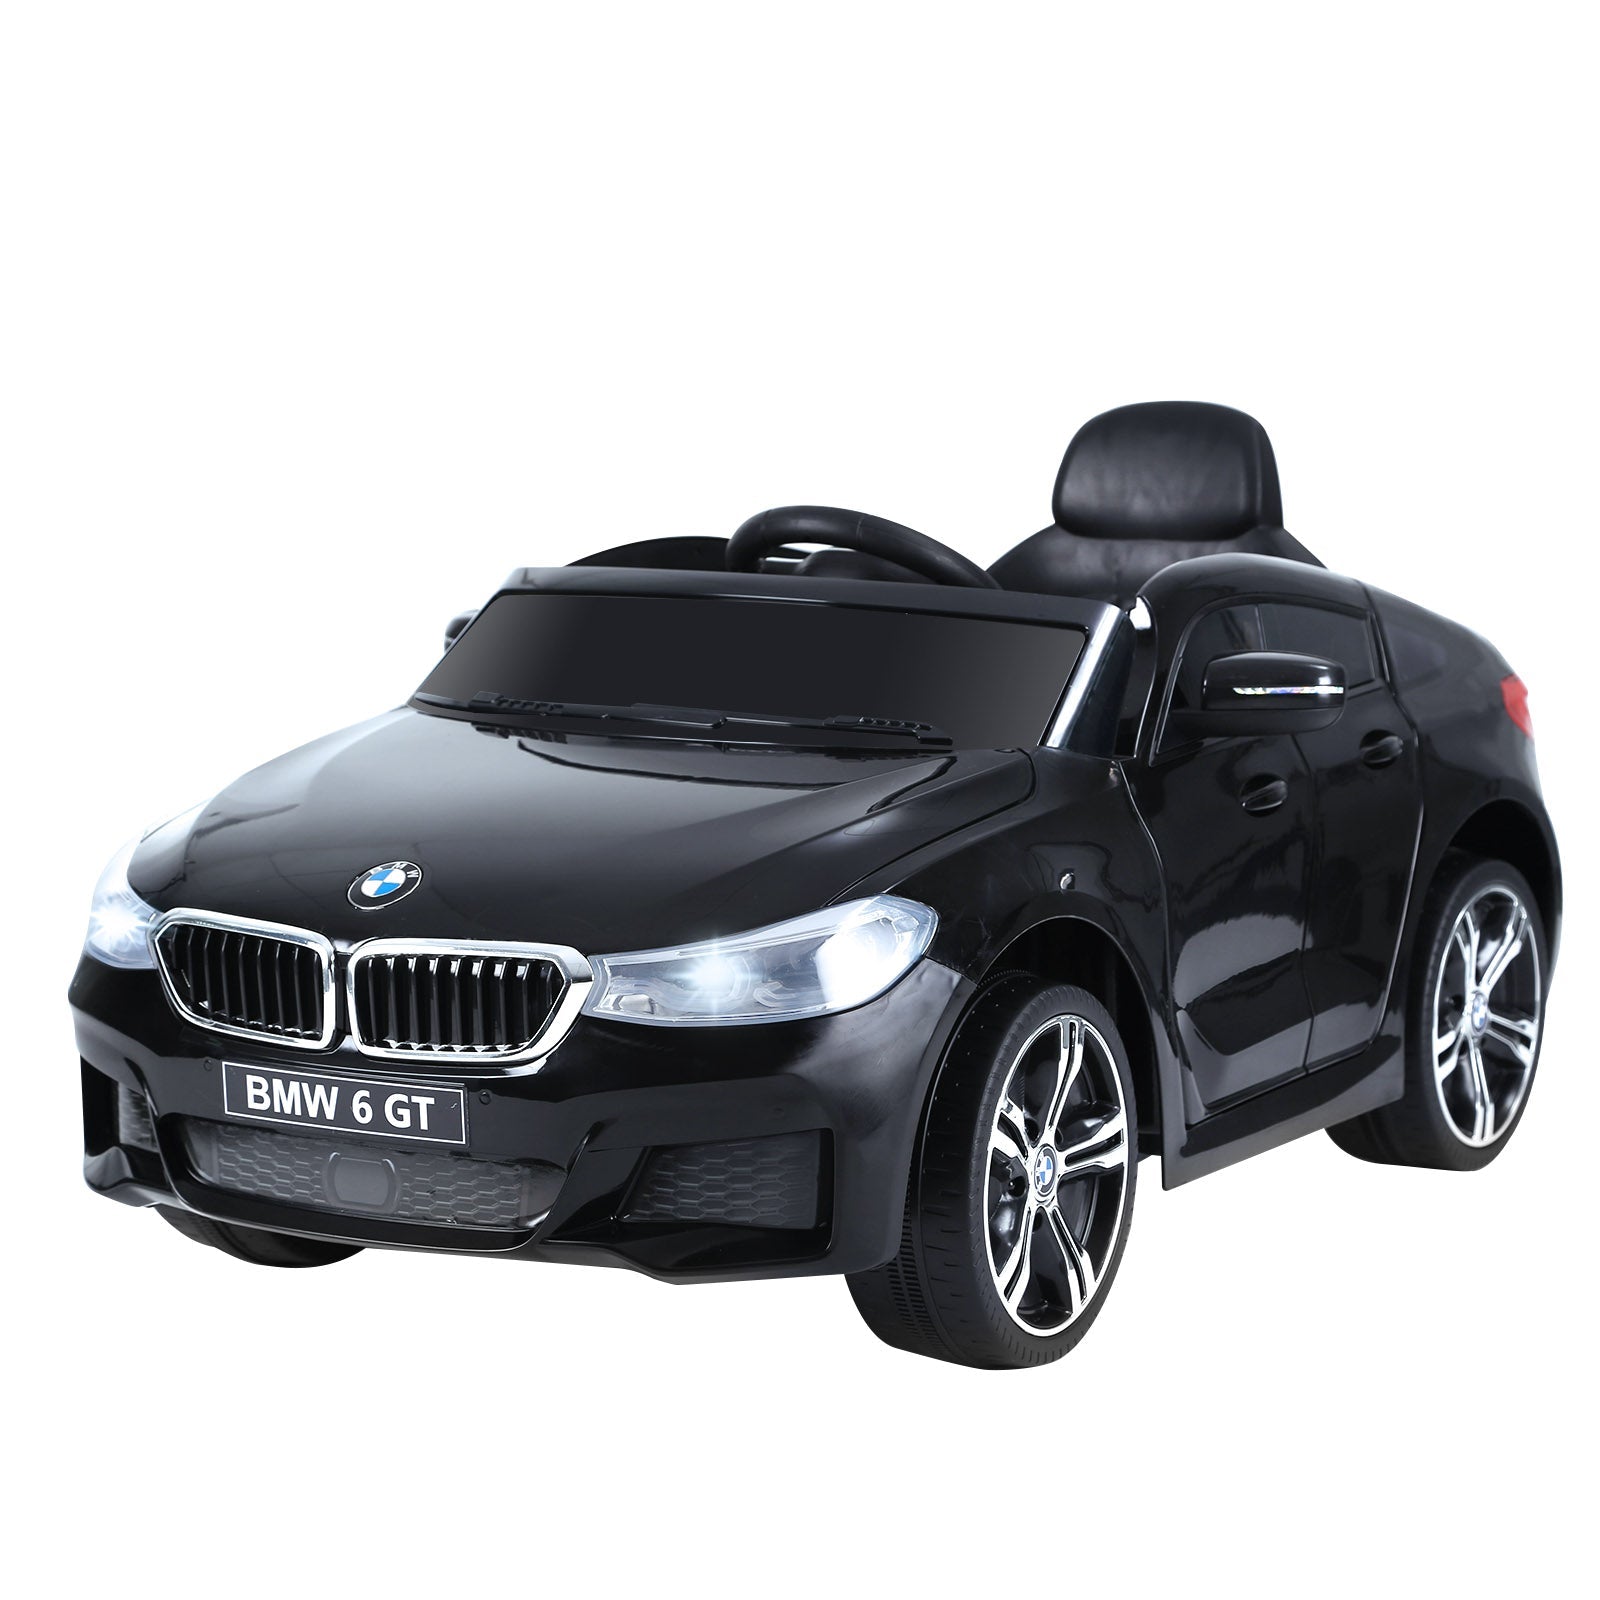 HOMCOM Licensed BMW 6GT 6V Kids Electric Ride On Car with Remote Control - Black